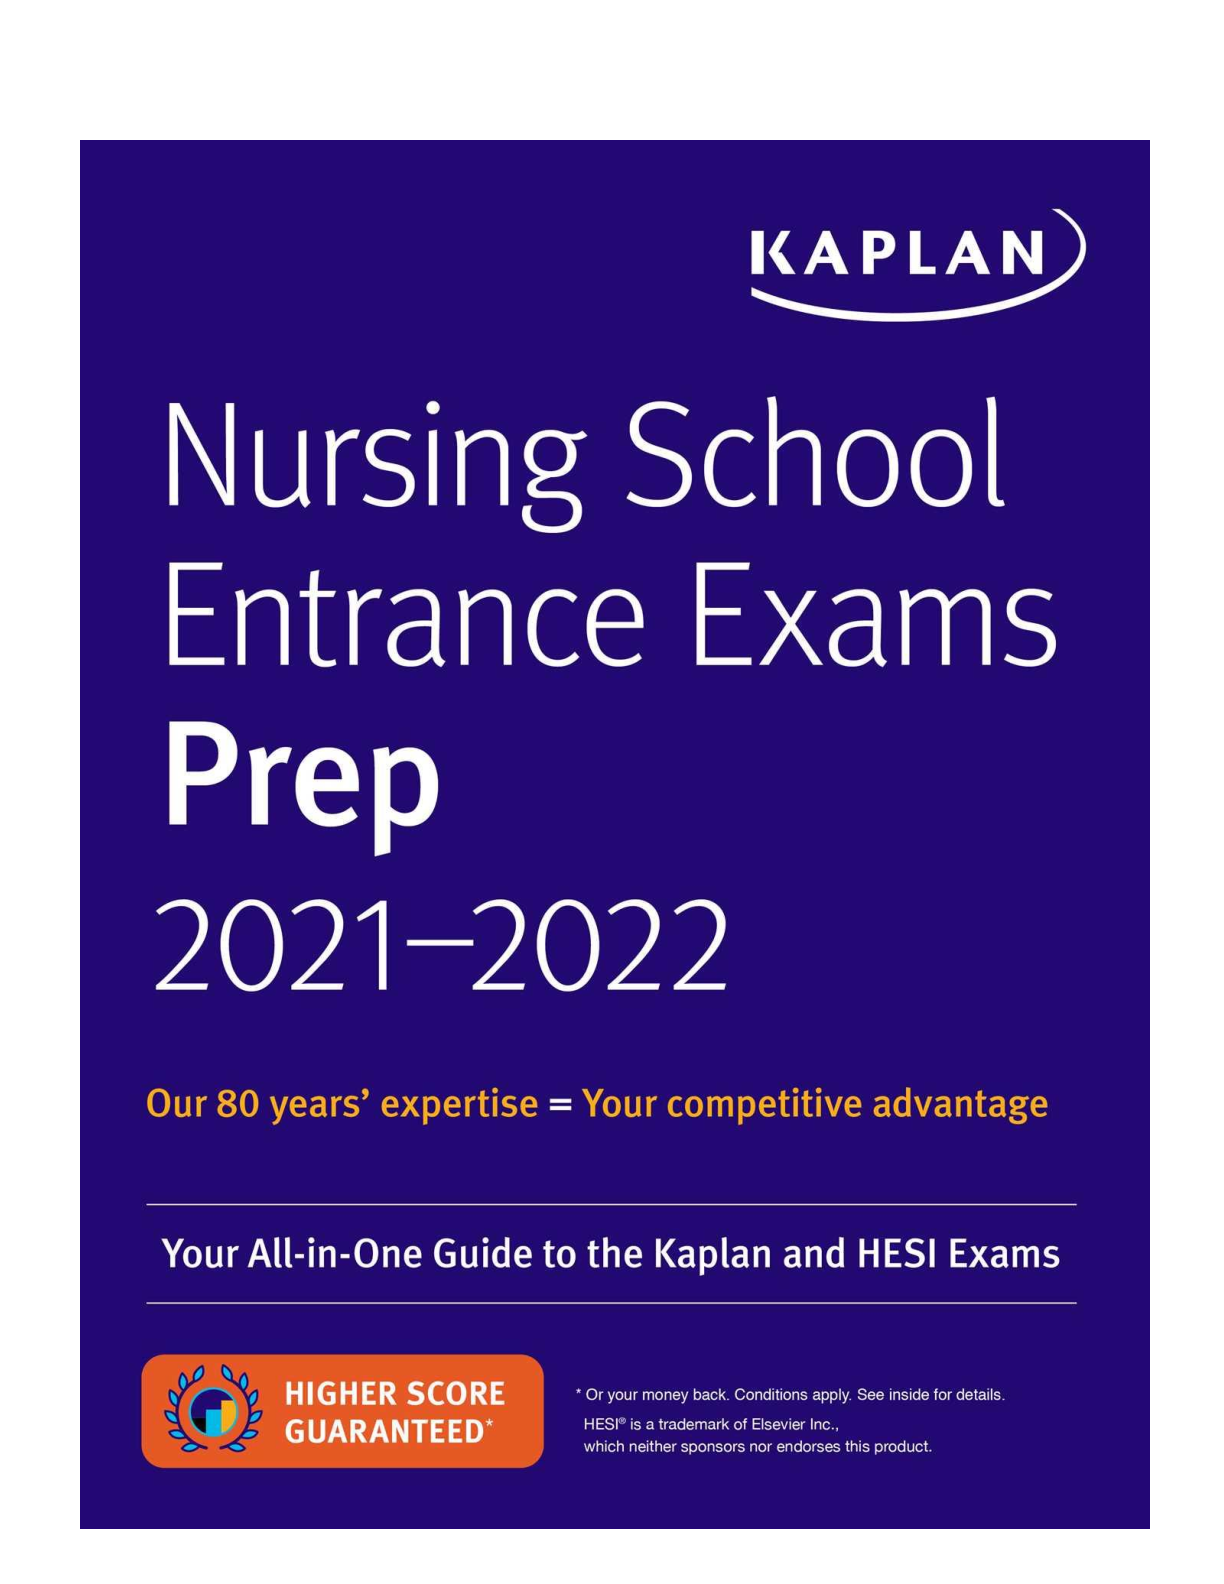 Kaplan Nursing Entrance Exam Prep Browsegrades